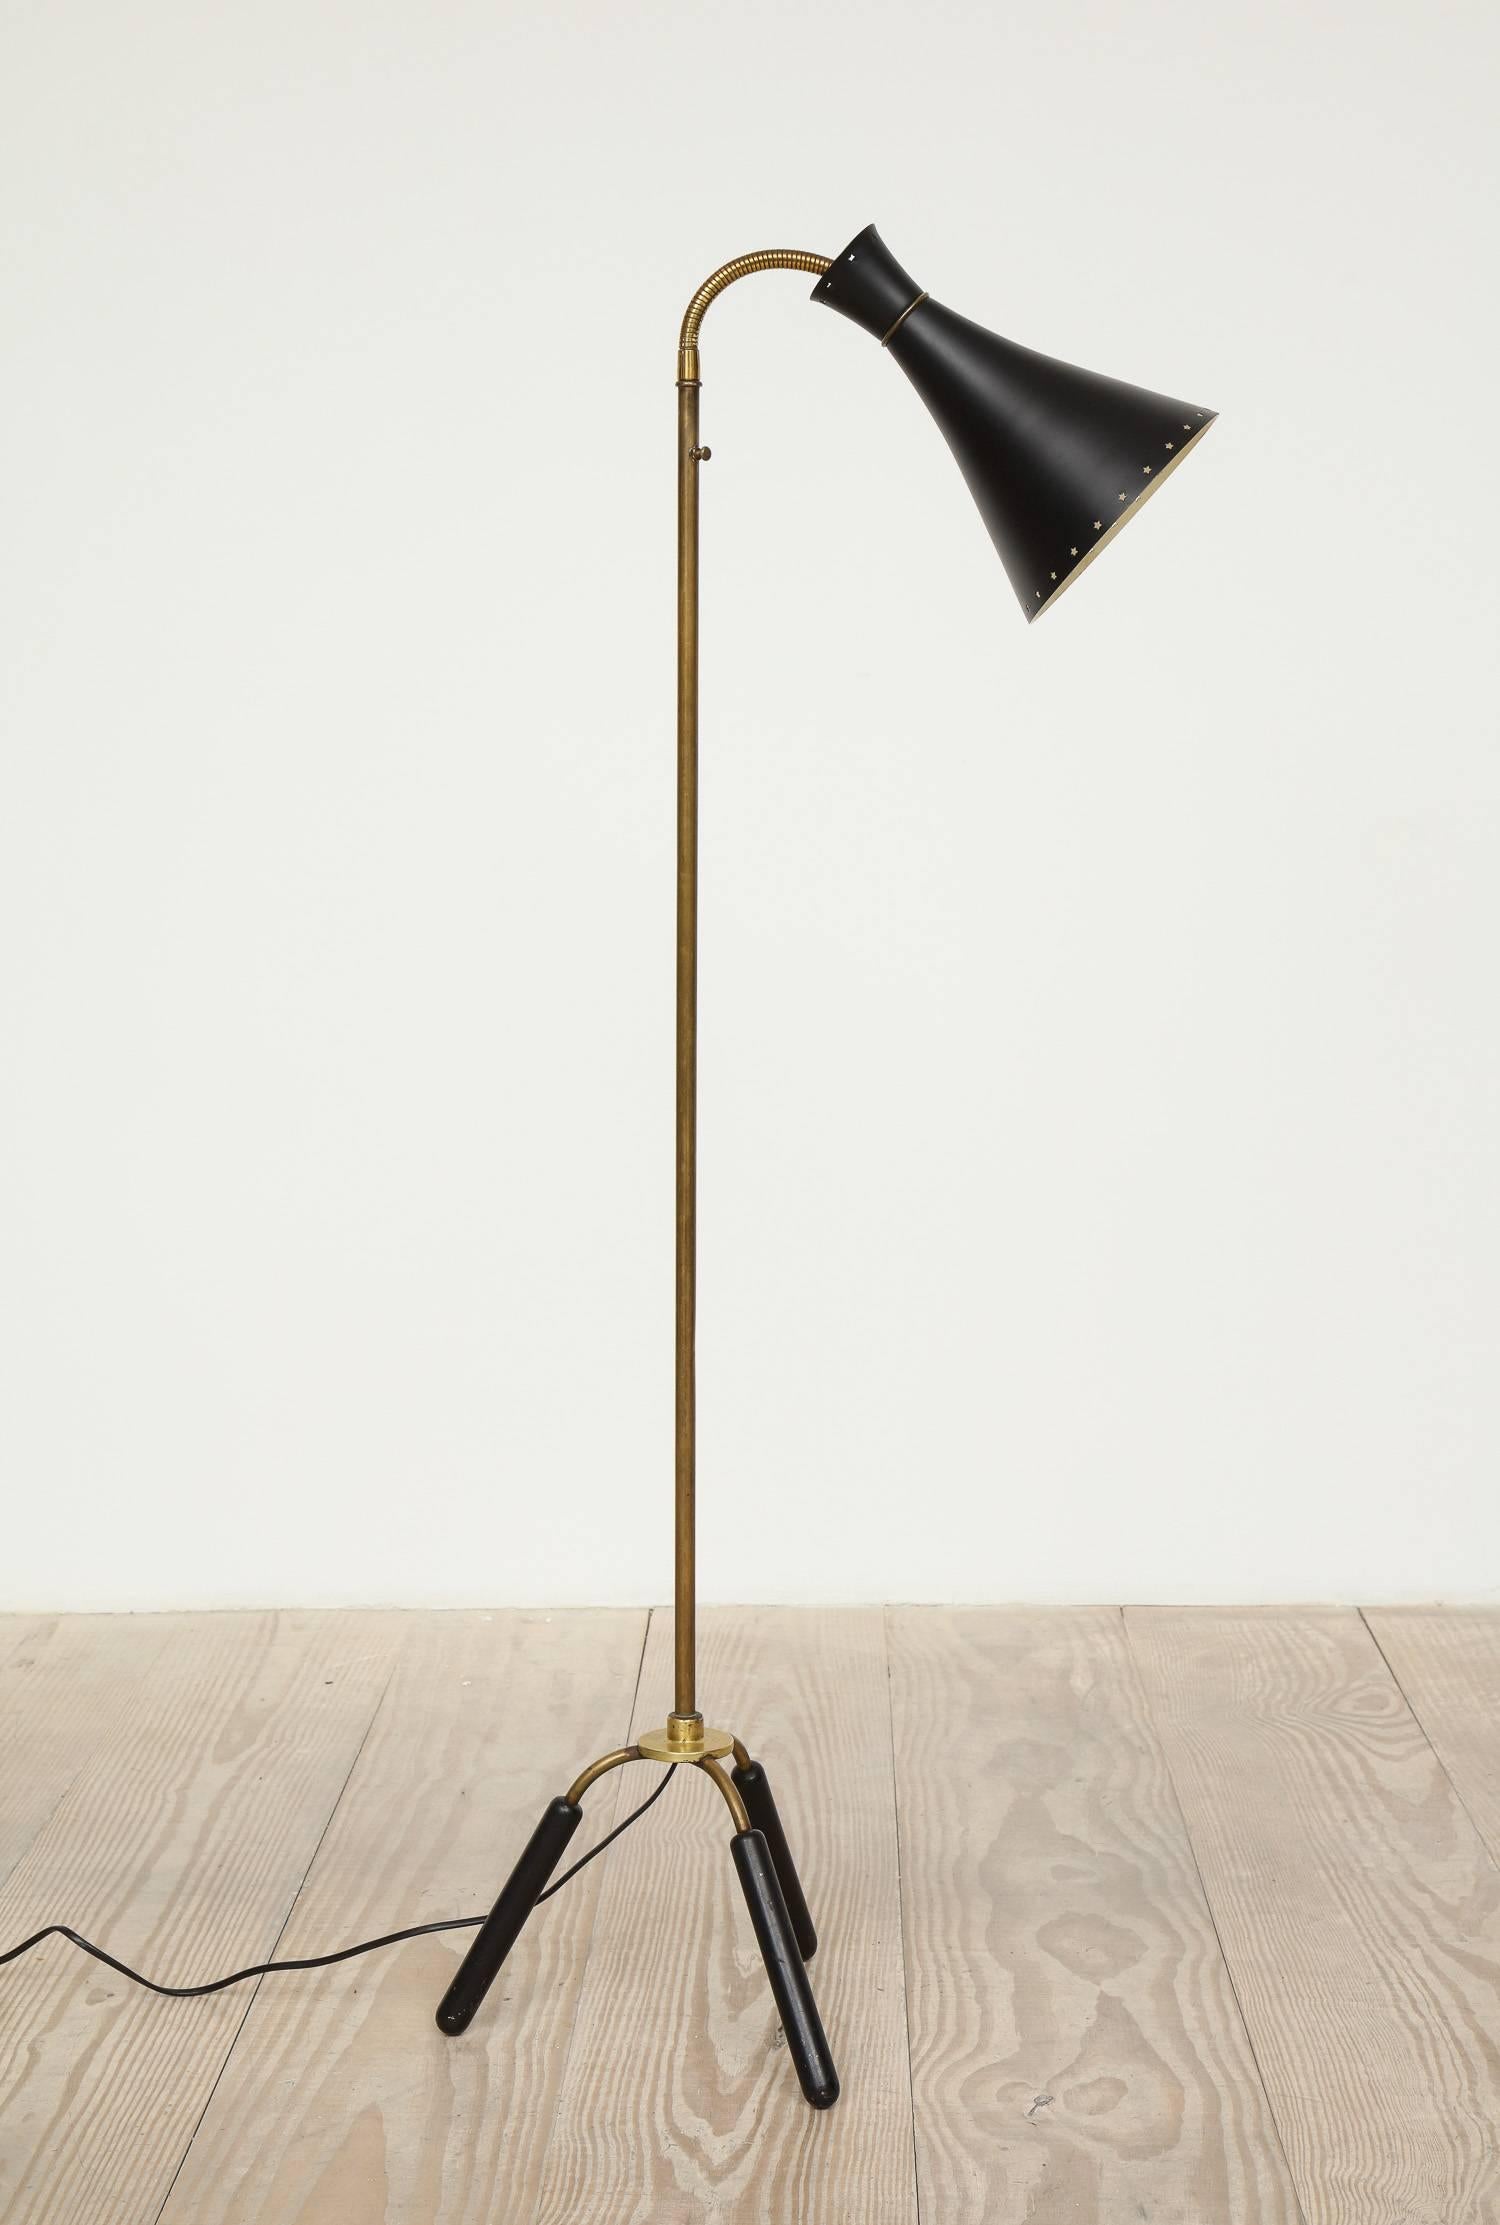 Svend-Åage Holm Sorensen, Danish Adjustable Standing Lamp, Denmark, Circa 1960 1